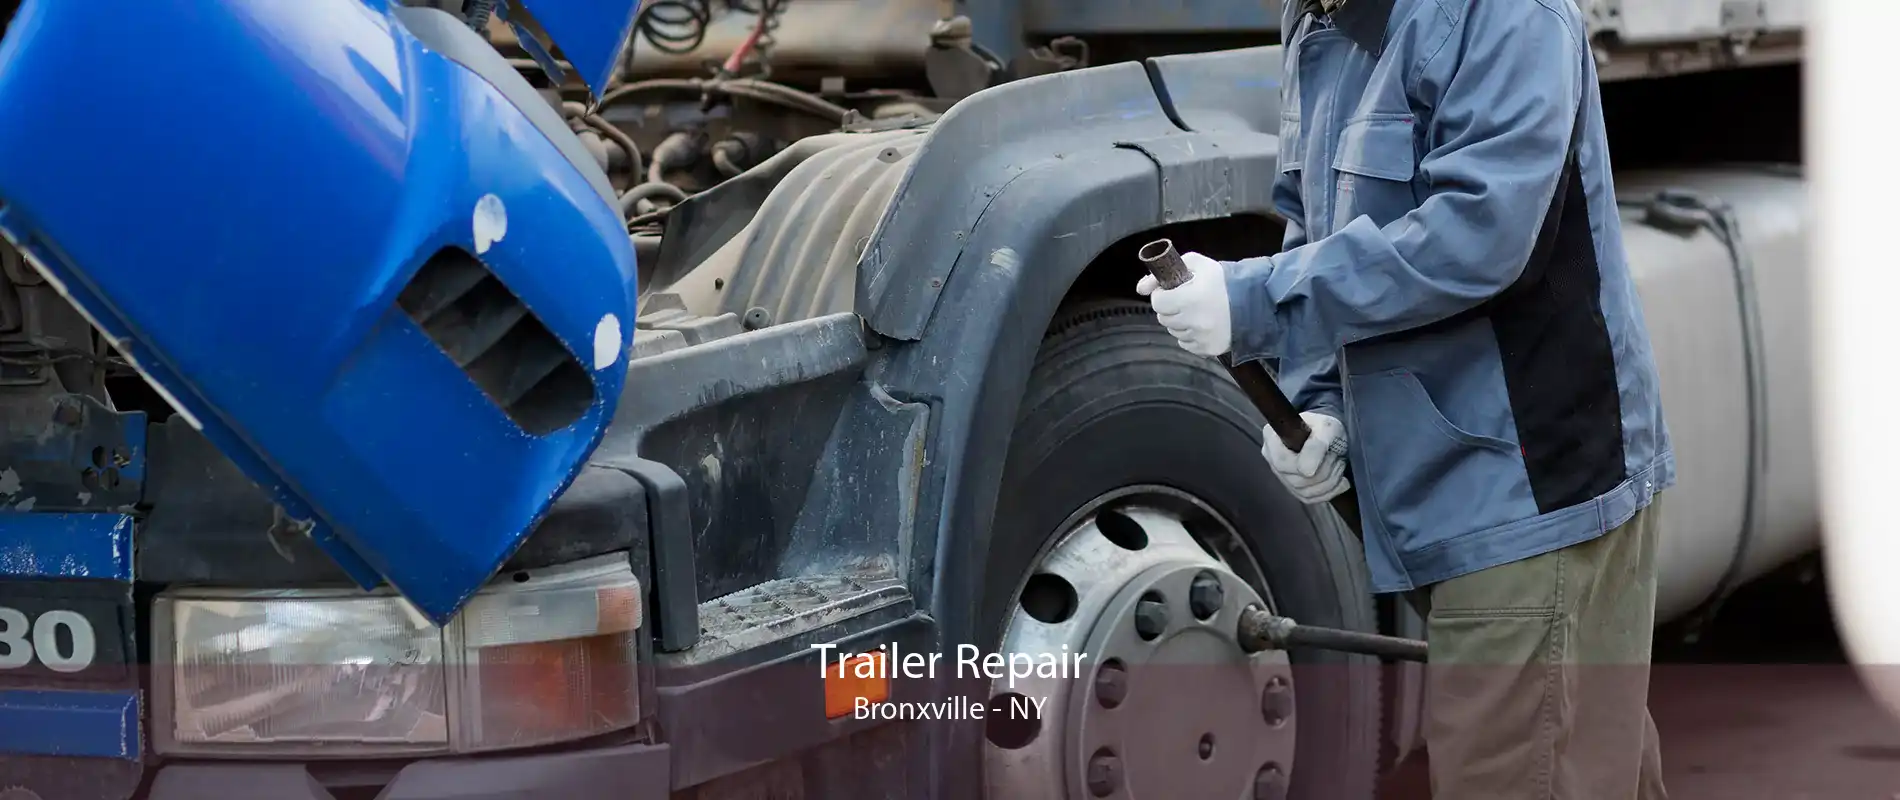 Trailer Repair Bronxville - NY